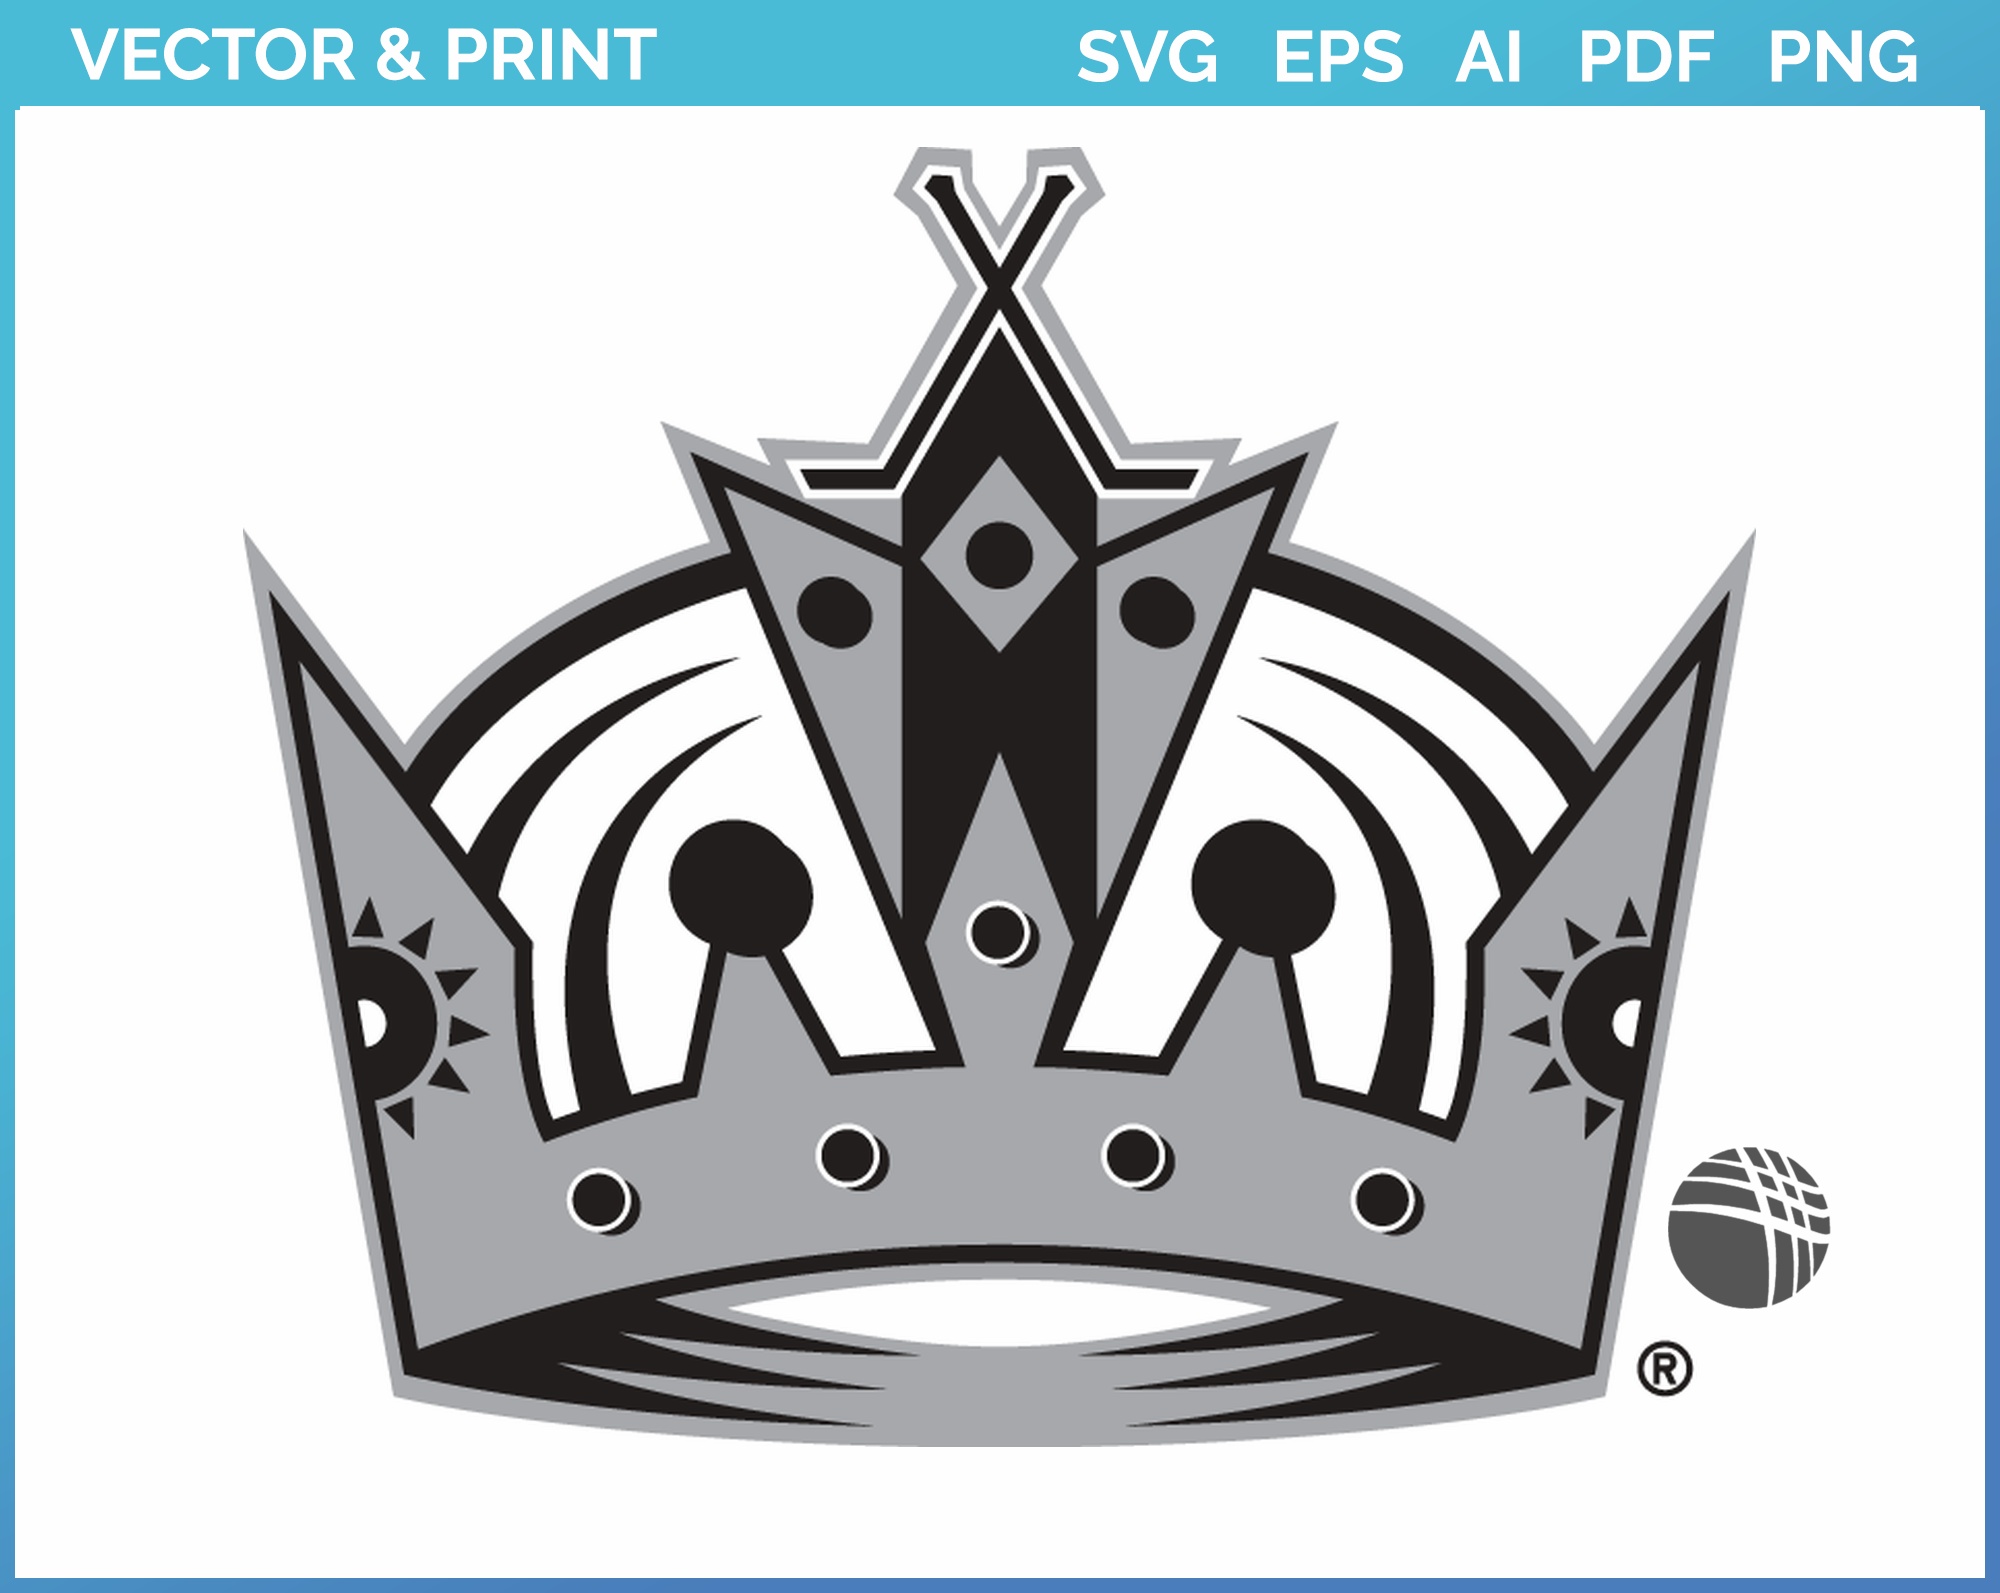 Los Angeles Kings Crown Logo SVG - Free Sports Logo Downloads - people ...